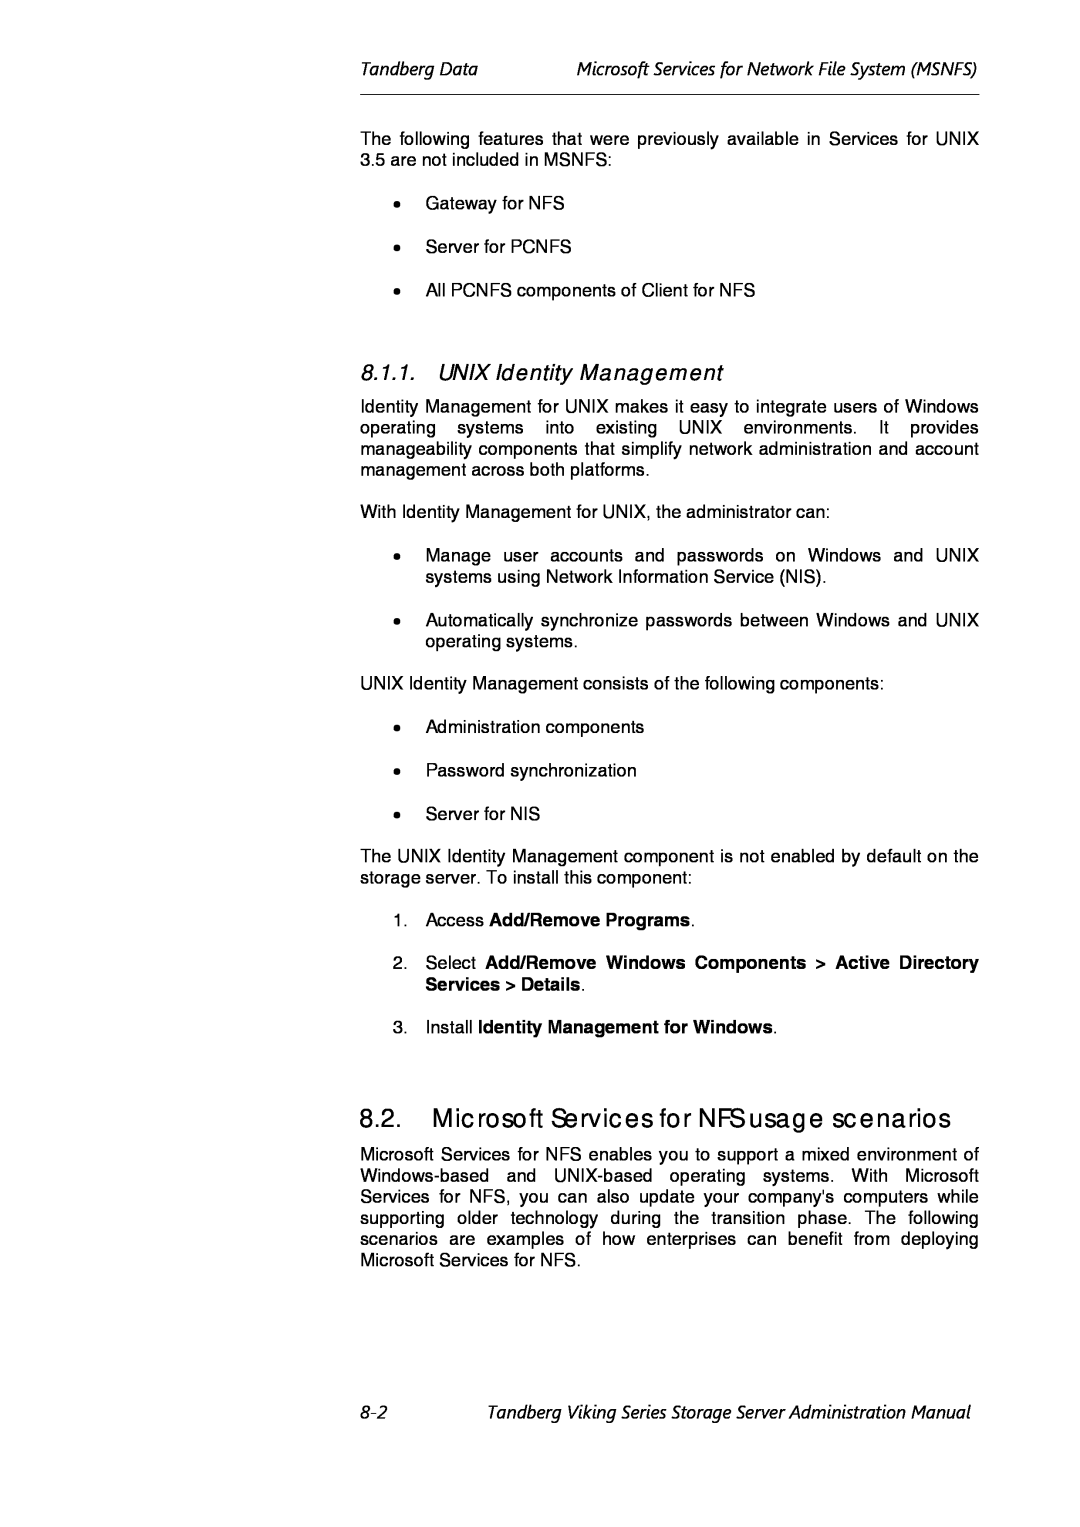 Tandberg Data Viking FS-412, Viking FS-1600 manual Microsoft Services for NFS usage scenarios, UNIX Identity Management 